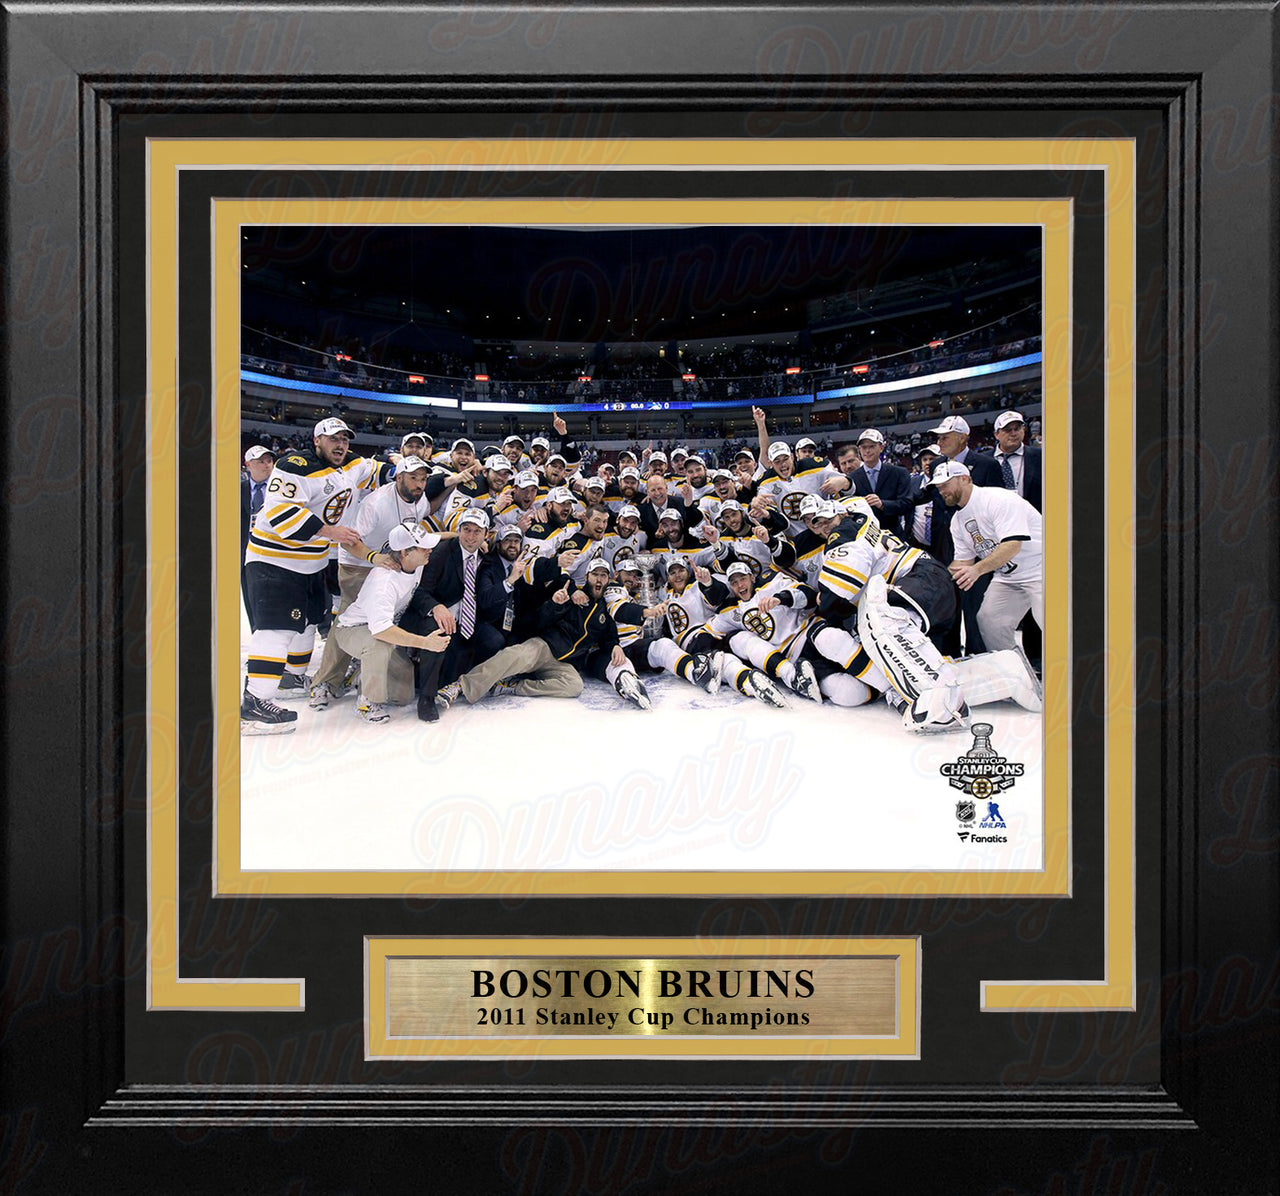 Boston Bruins 2011 Stanley Cup Champions Team Celebration 8" x 10" Framed Hockey Photo - Dynasty Sports & Framing 